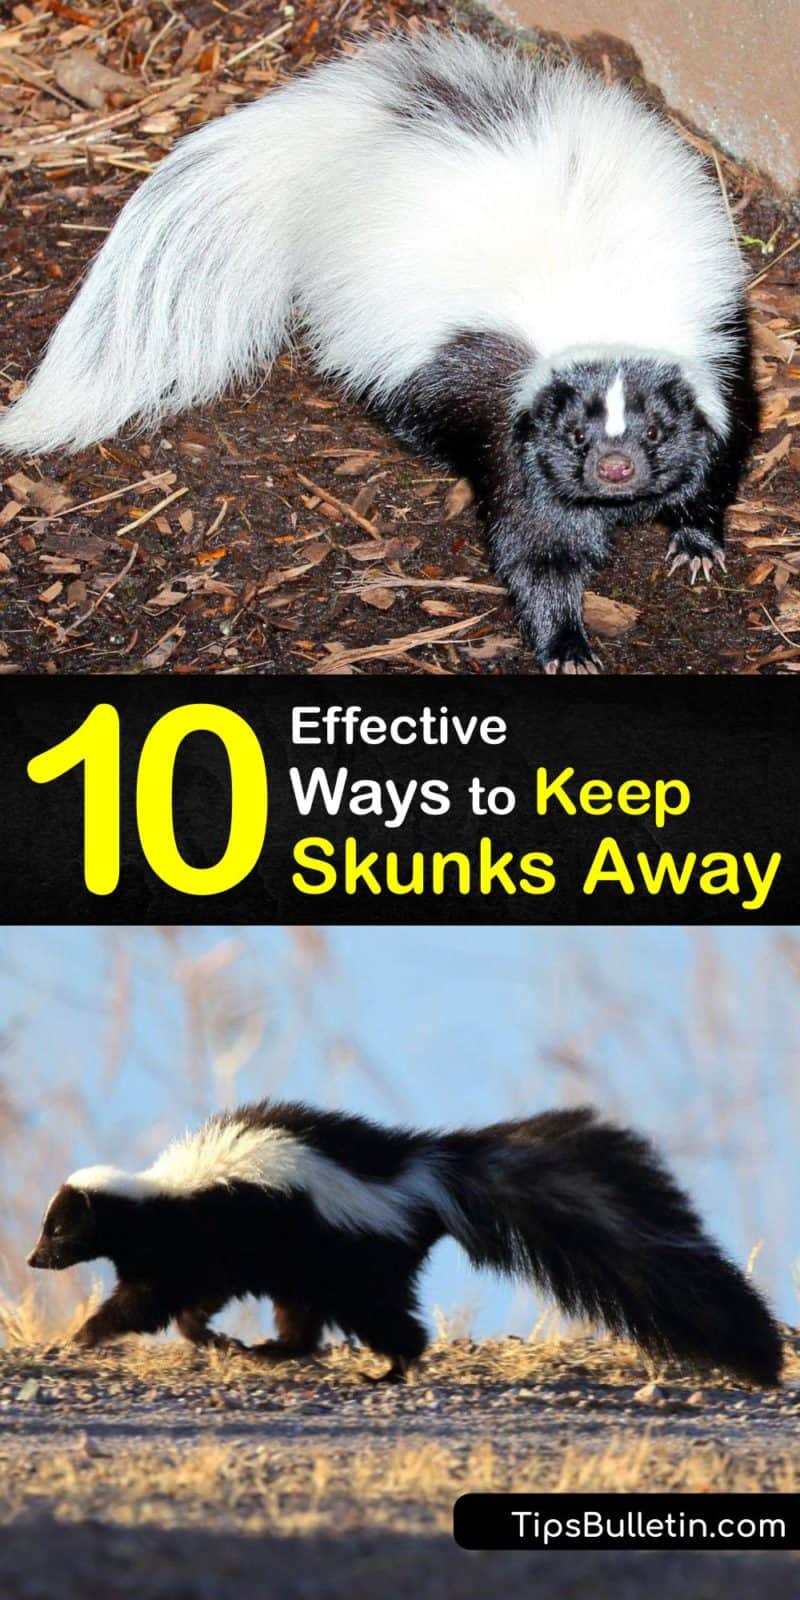 10 Effective Ways to Keep Skunks Away